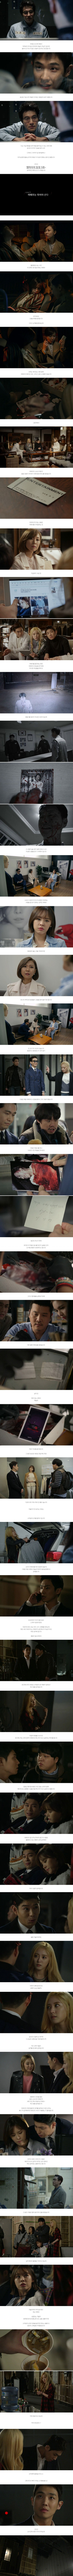 episode 5 captures for the Korean drama 'Vampire Detective'